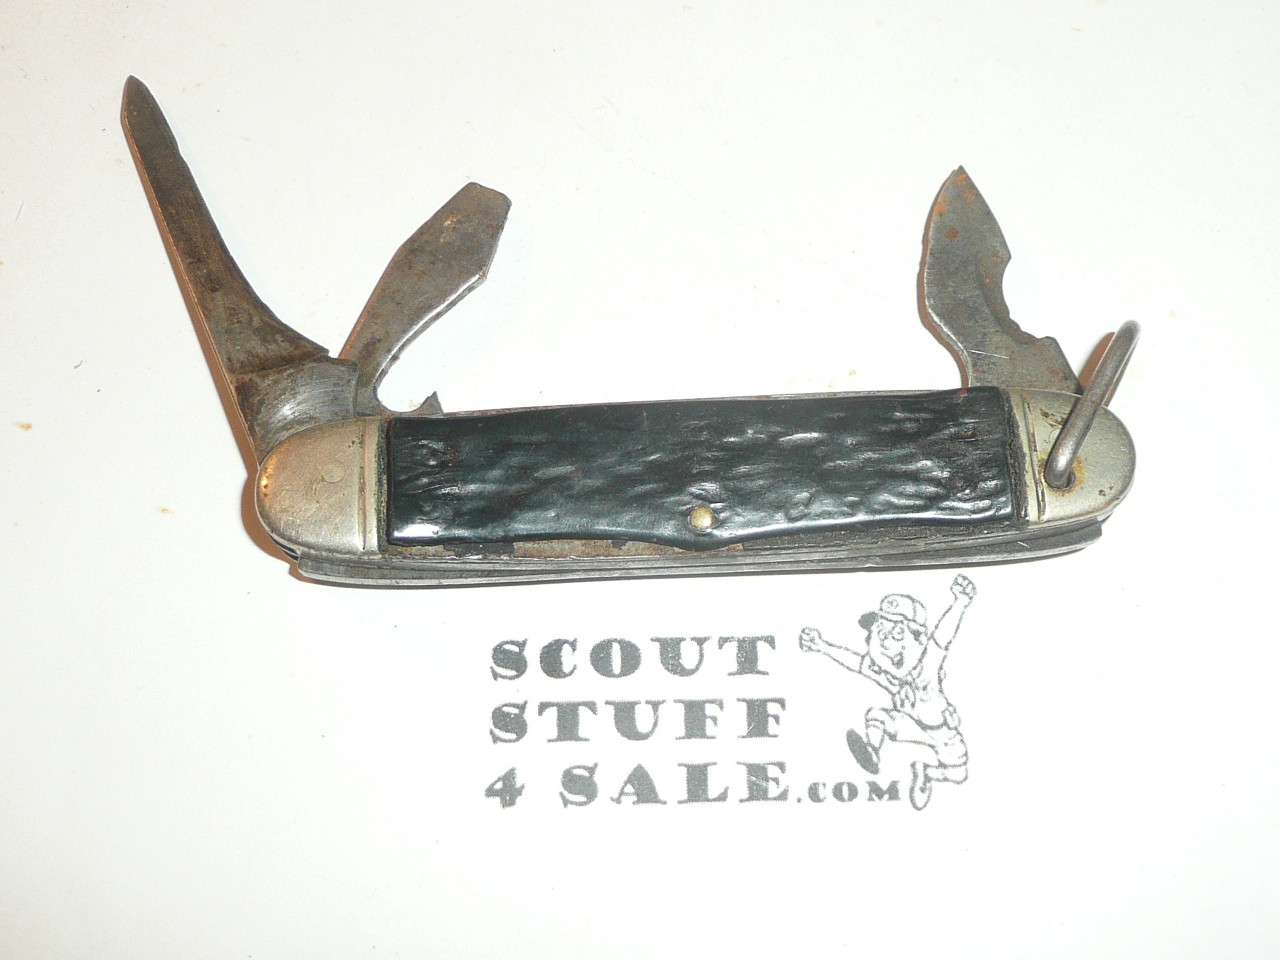 Boy Scout Knife, Kent Manufacturer, used